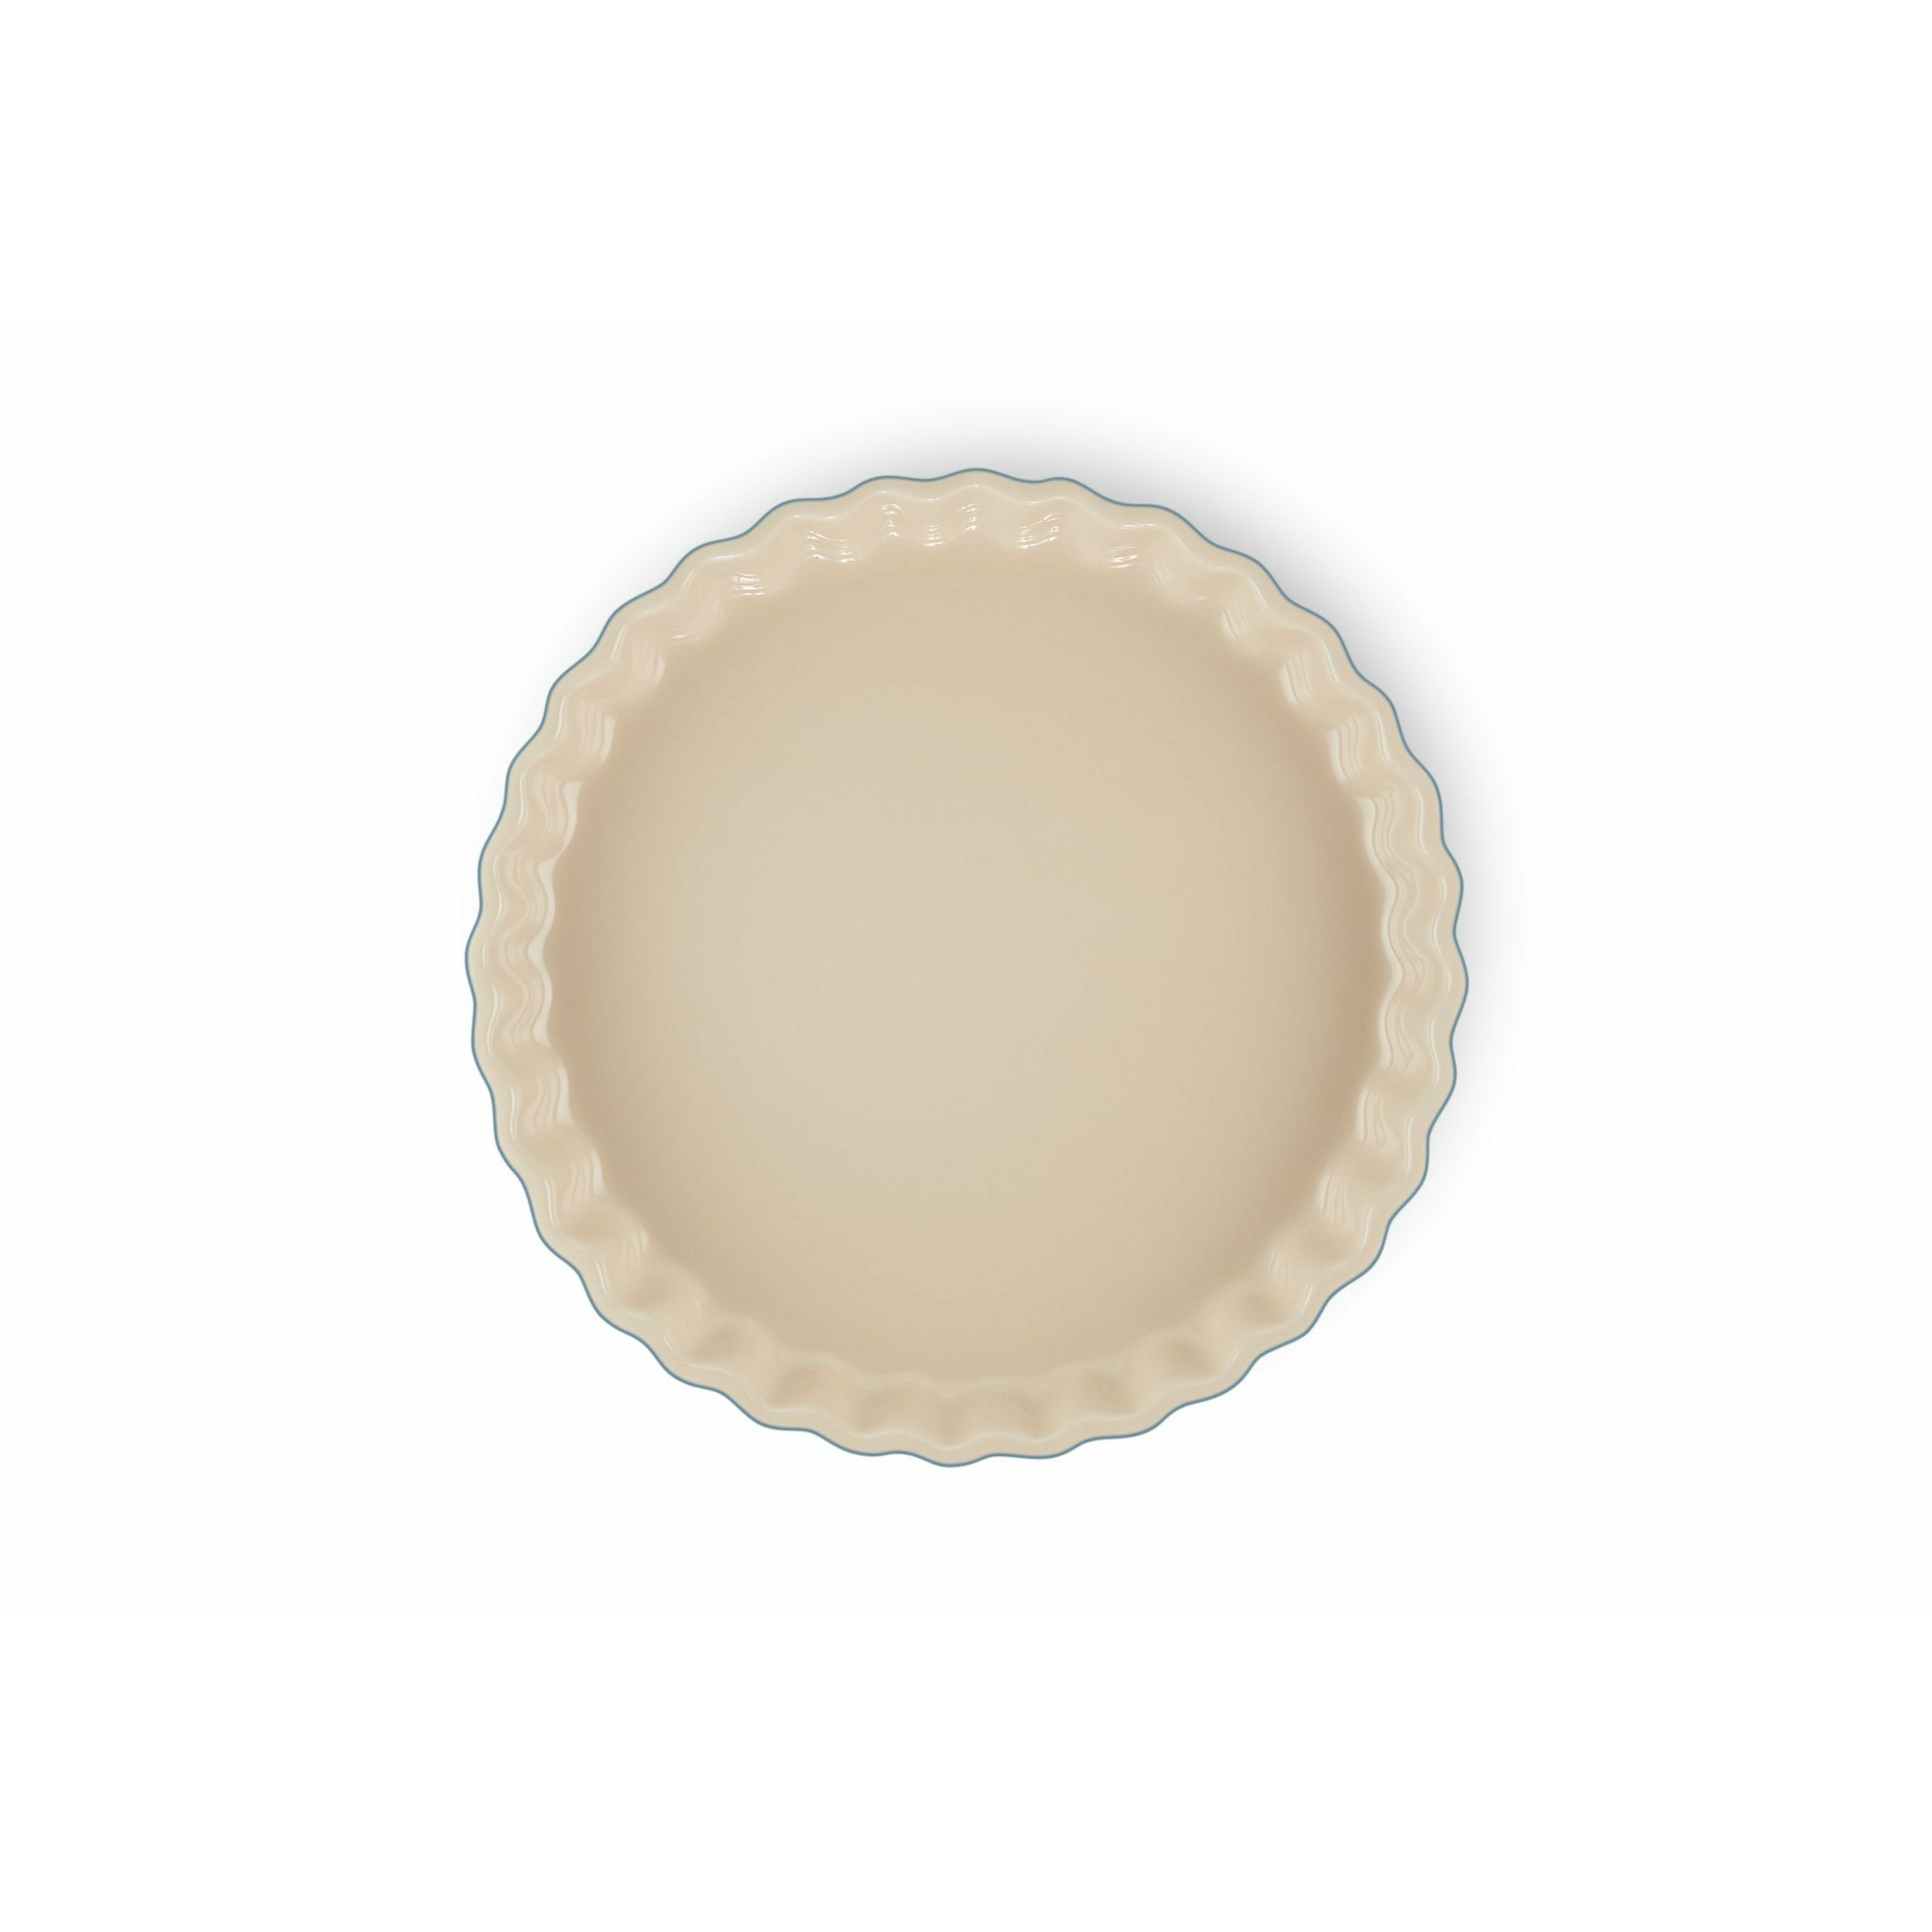 Le Creuset Heritage Pie Dish 28 cm, Deep Teal